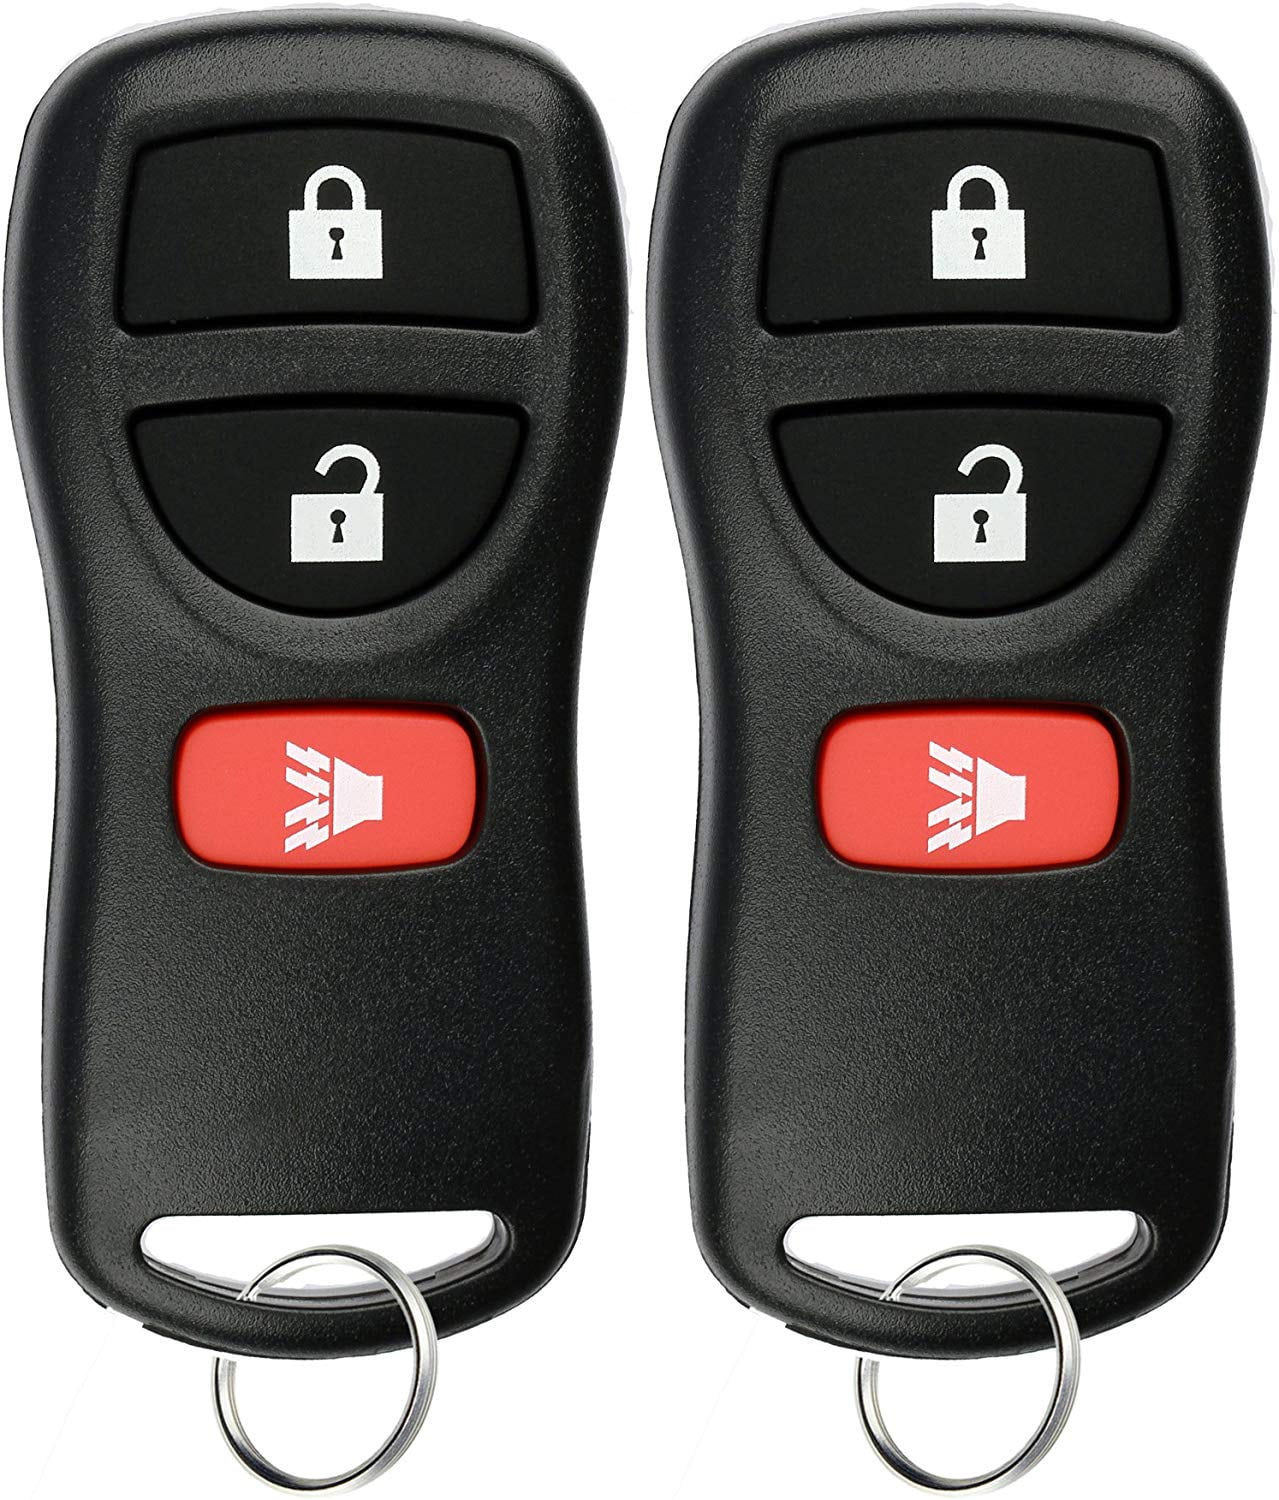 2x Uncut Replacement Car Key Fob Keyless Entry Remote Control For Fobik Trunk 4b 